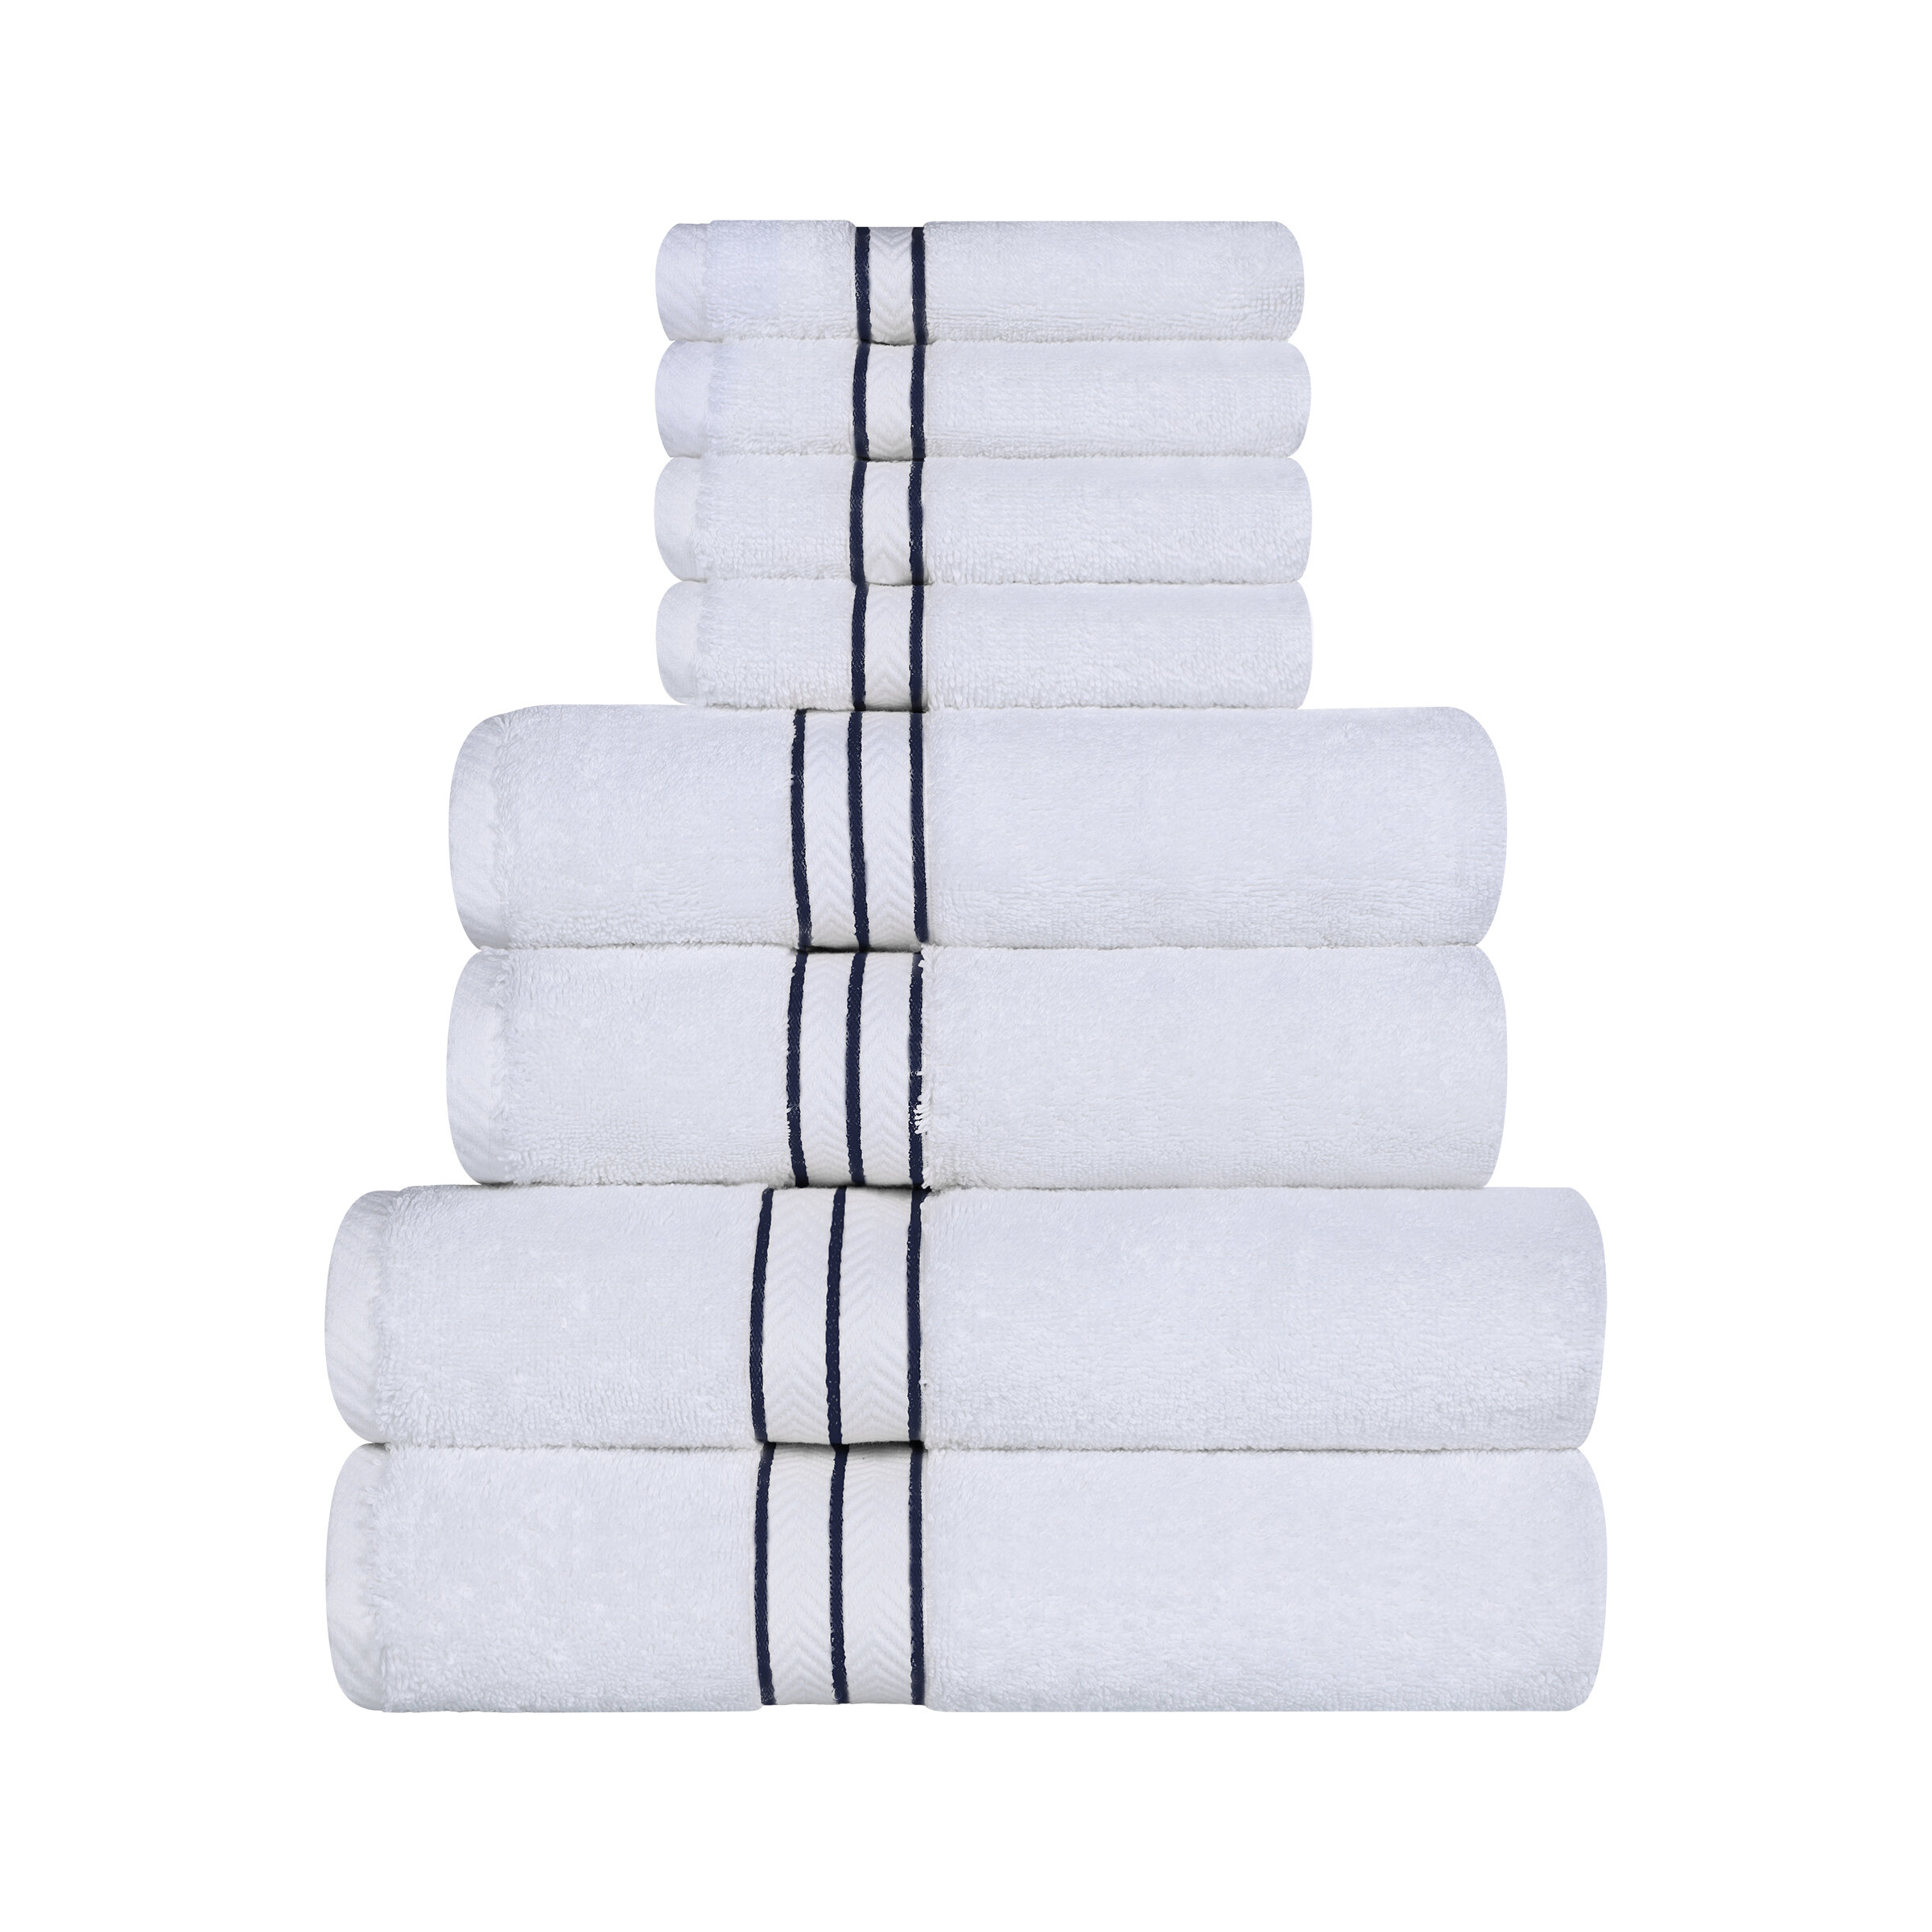 Canopy Lane 100% Cotton Ultra-Absorbent Bath Towel Set - 6-Piece